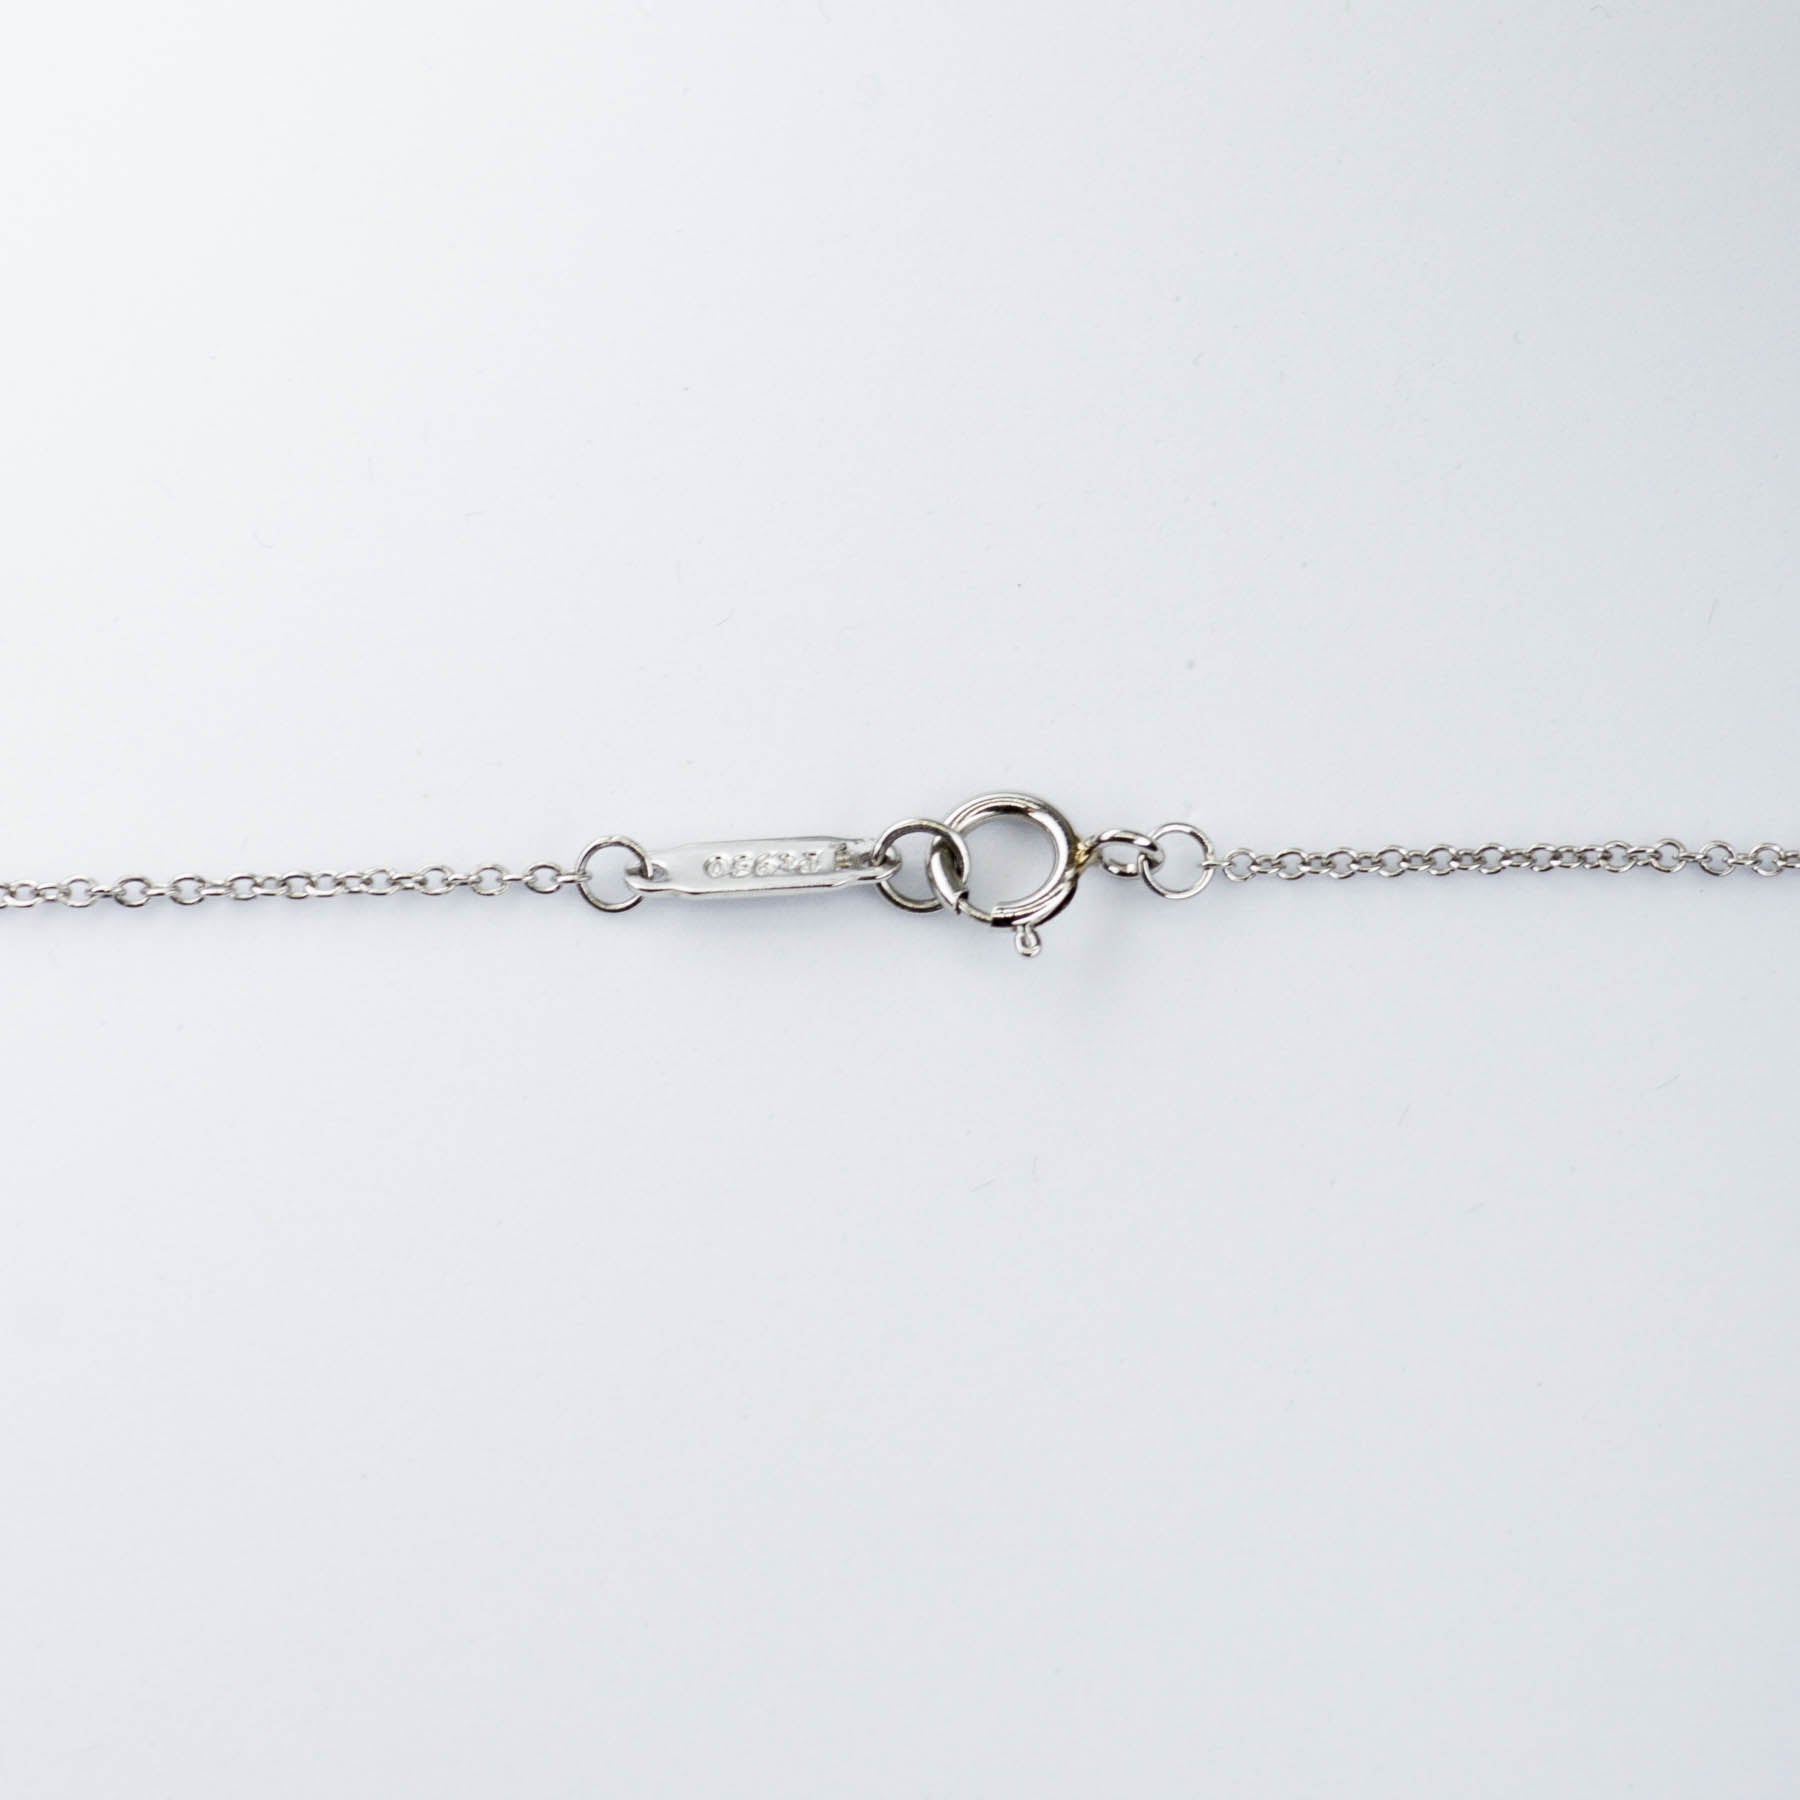 'Tiffany & Co.' Jean Schlumberger Diamond Cross Pendant Necklace | 0.35ctw | - 100 Ways